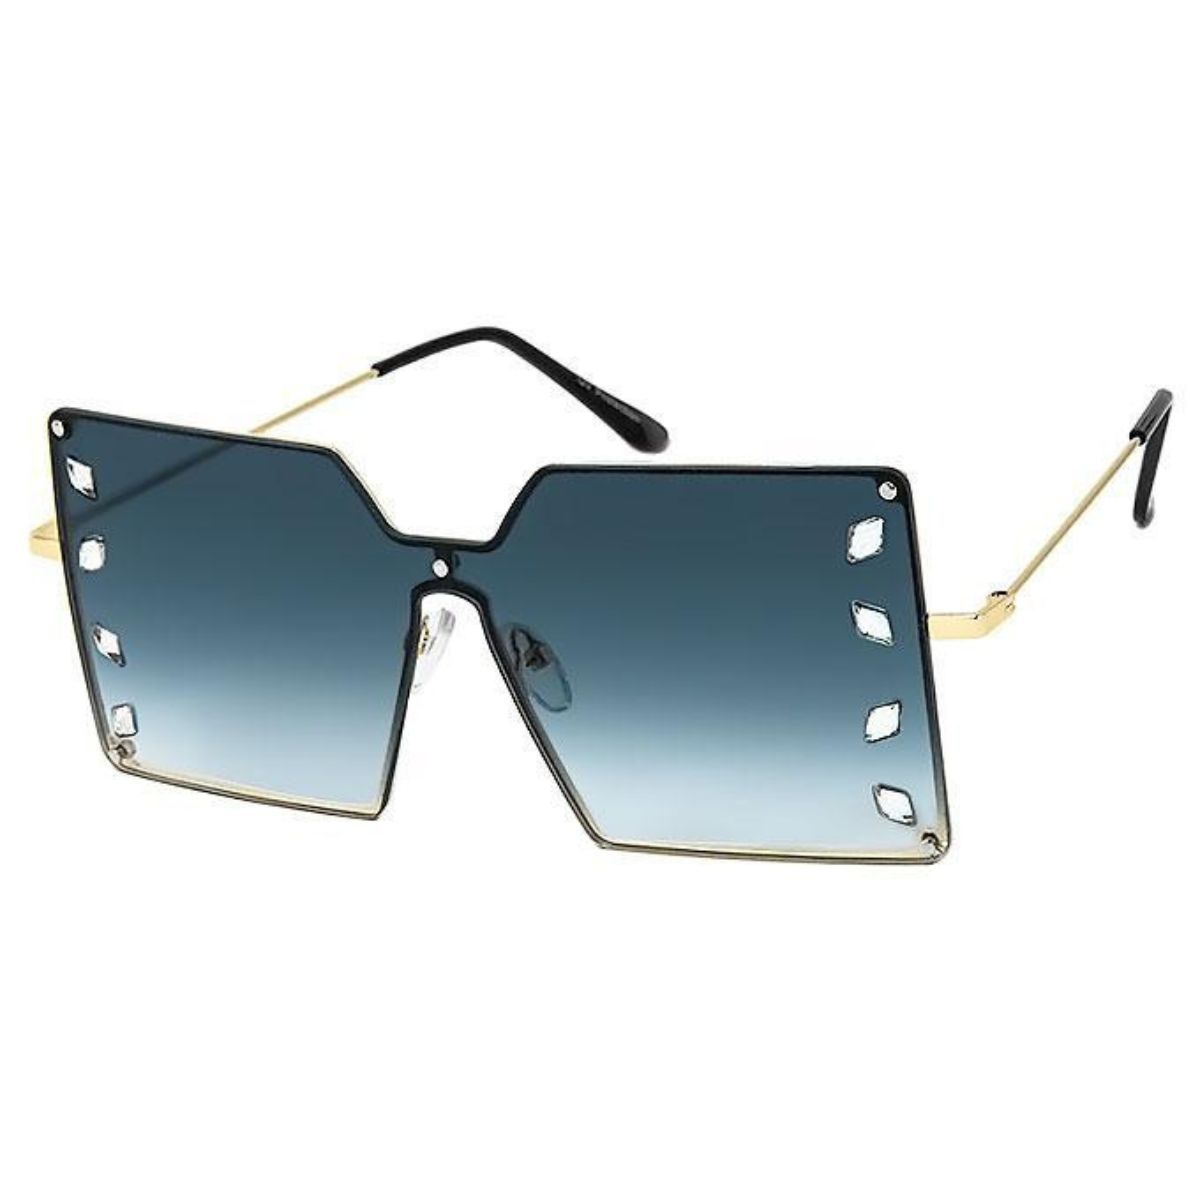 Black Square Stone Sunglasses